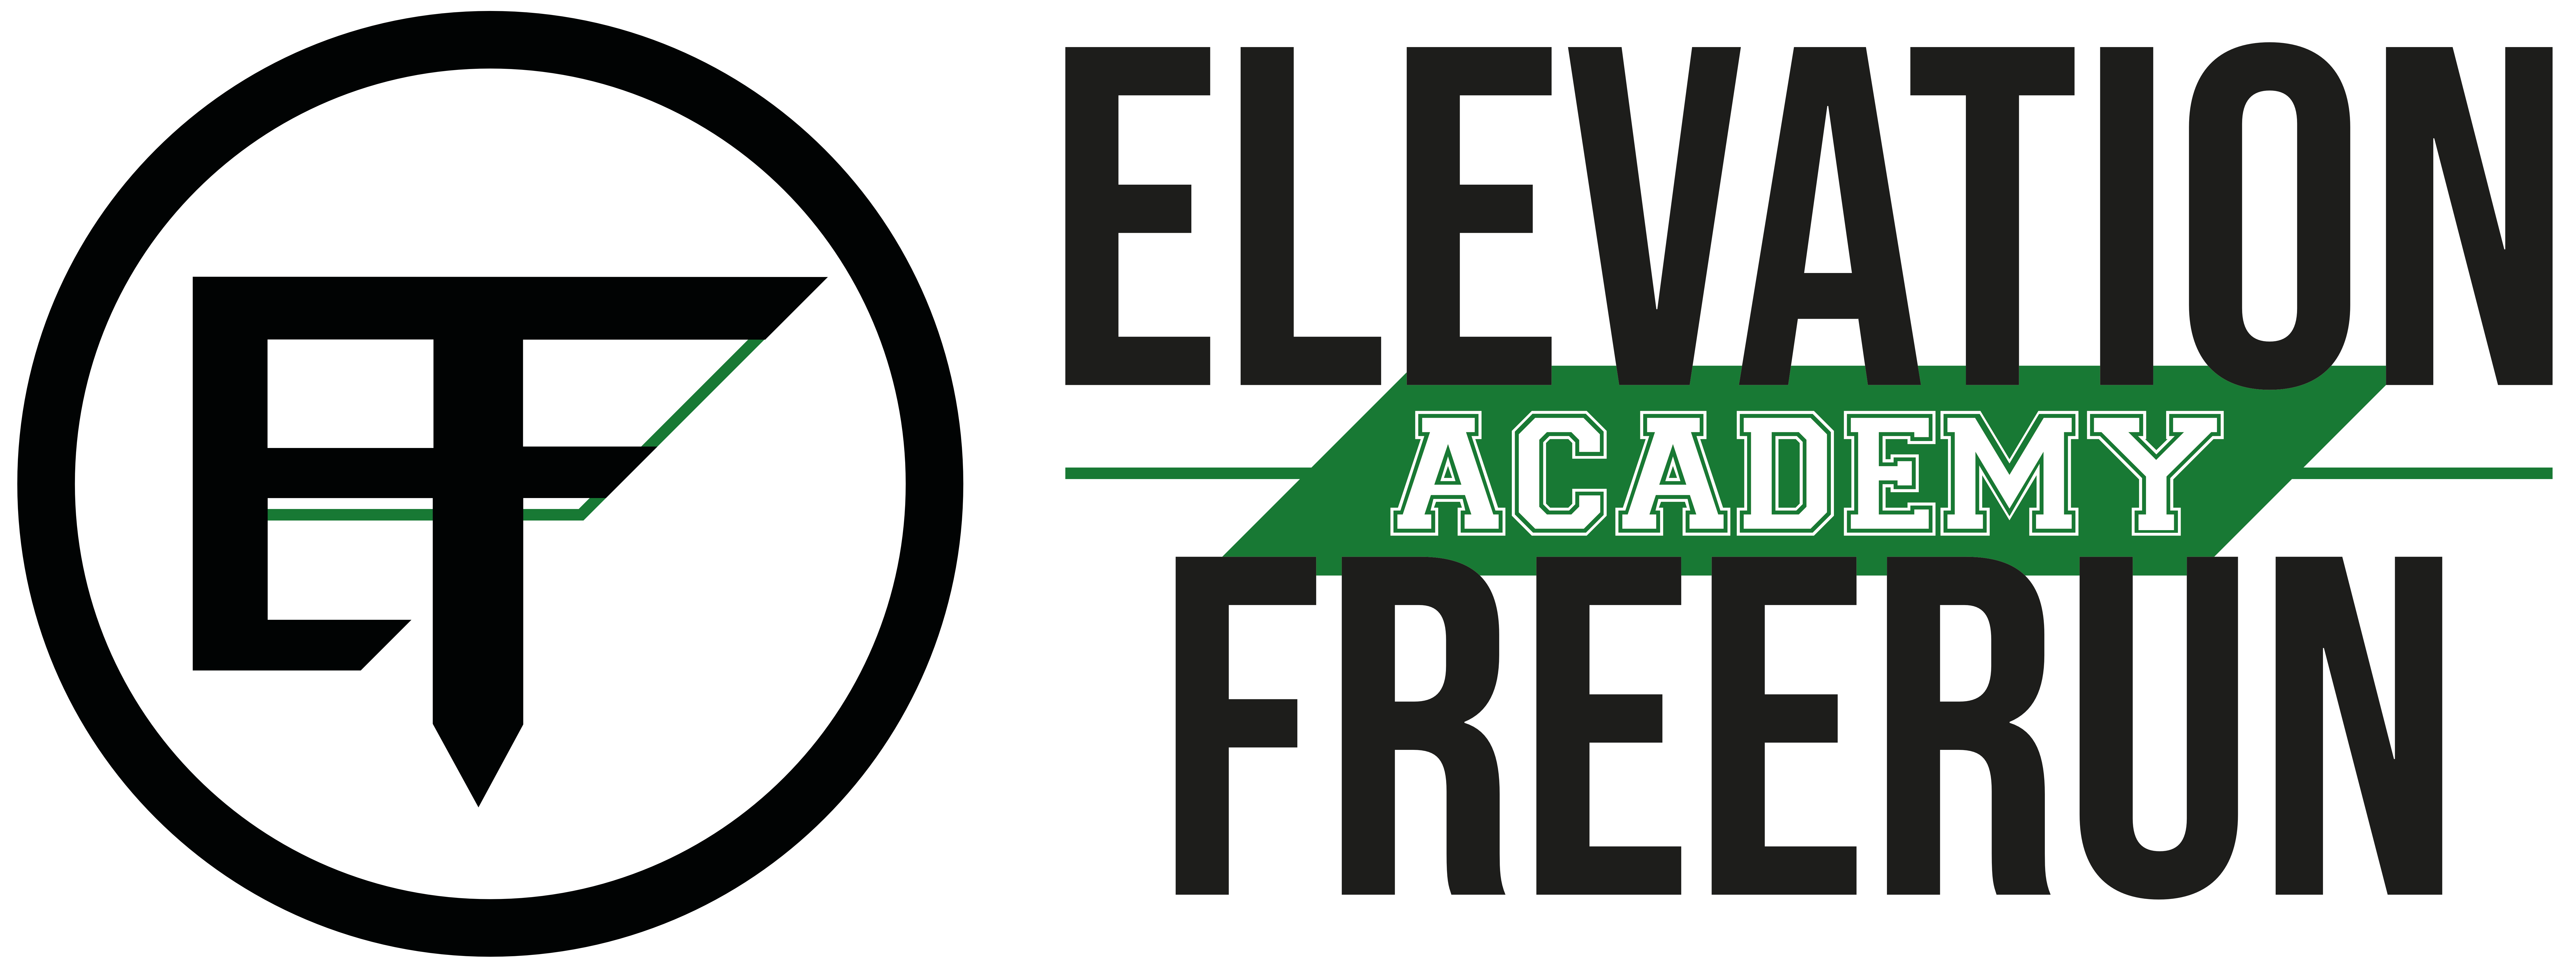 Elevation Academy